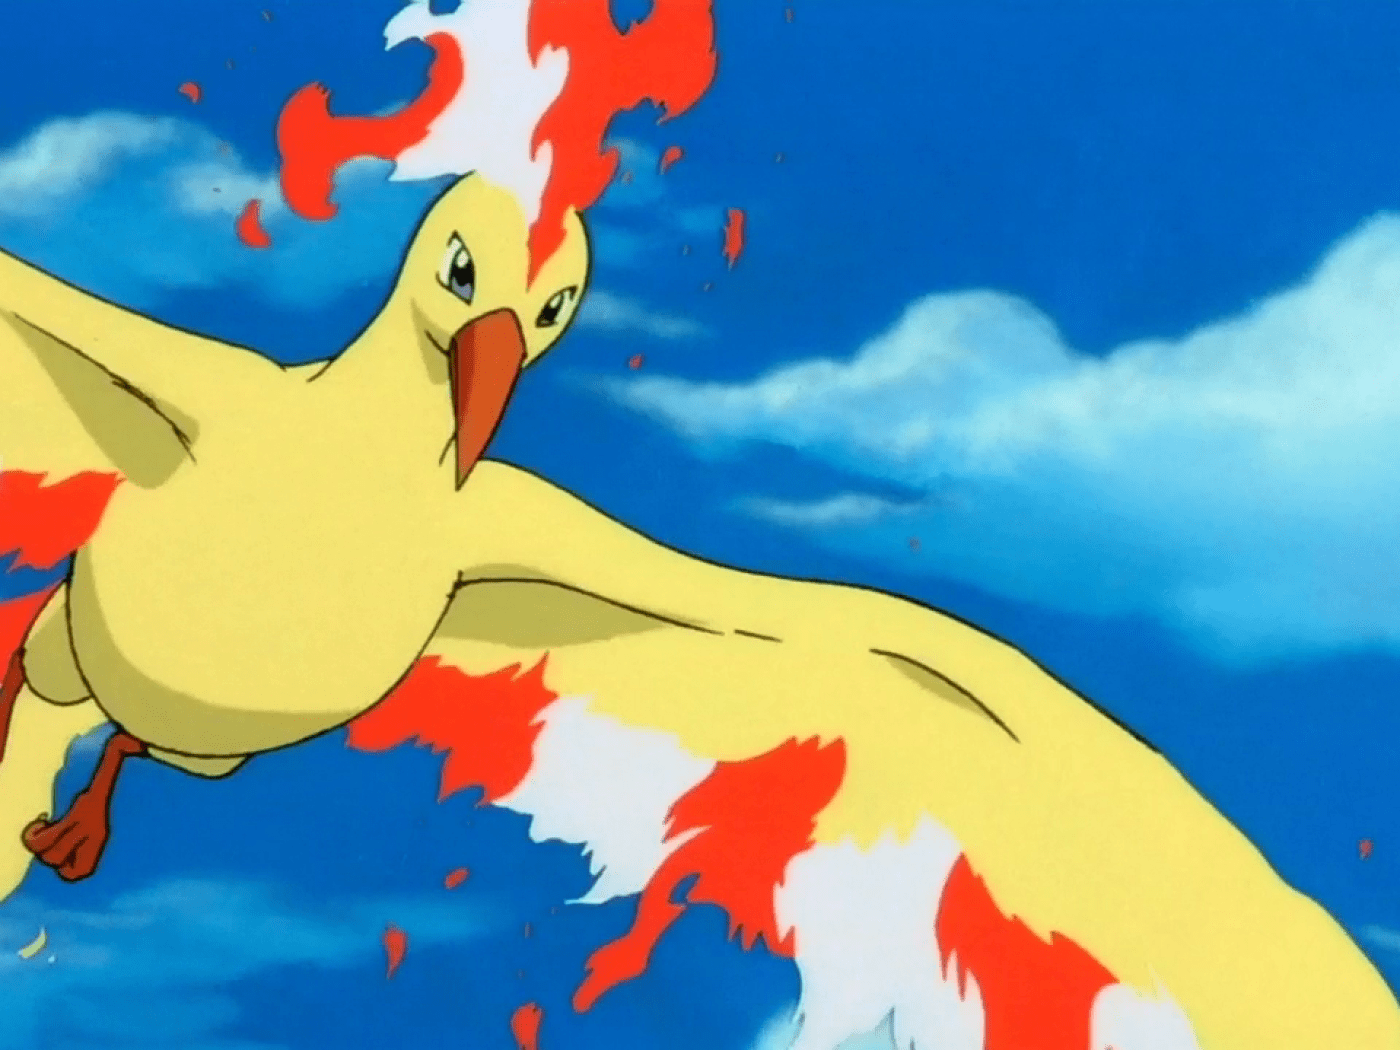 Articuno, Zapdos and Moltres found in the wild in Pokémon go